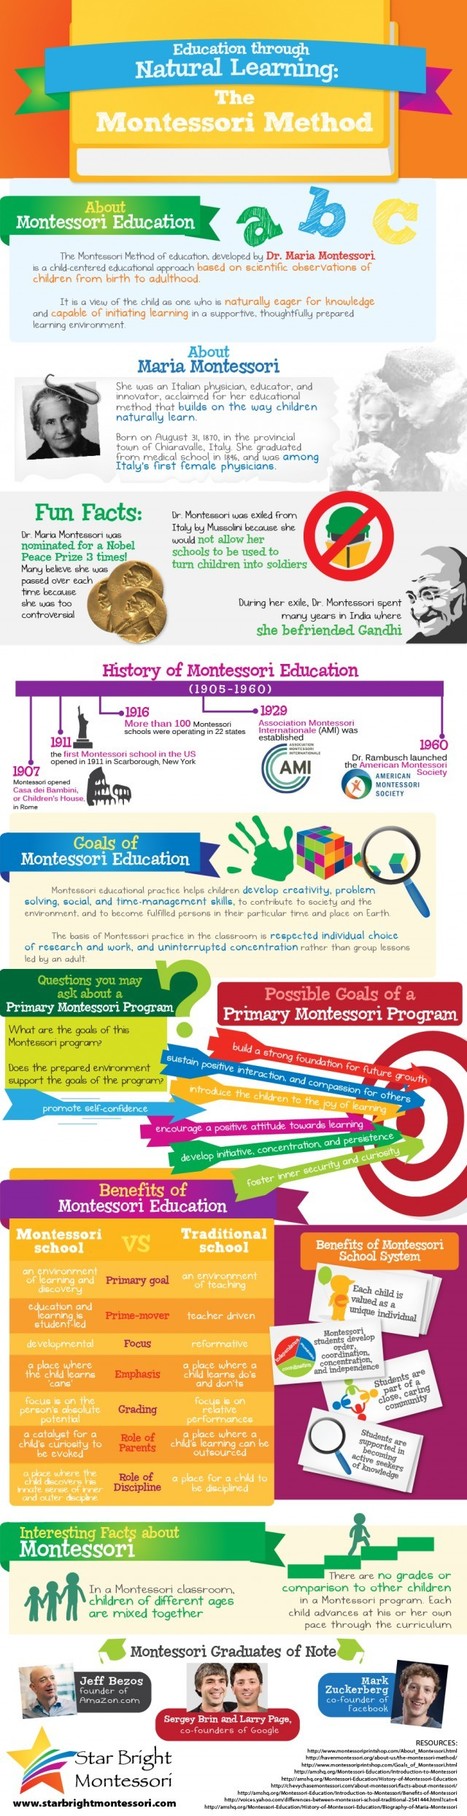 Education: The Montessori Method [infographic] | Montessori & 21st Century Learning | Scoop.it